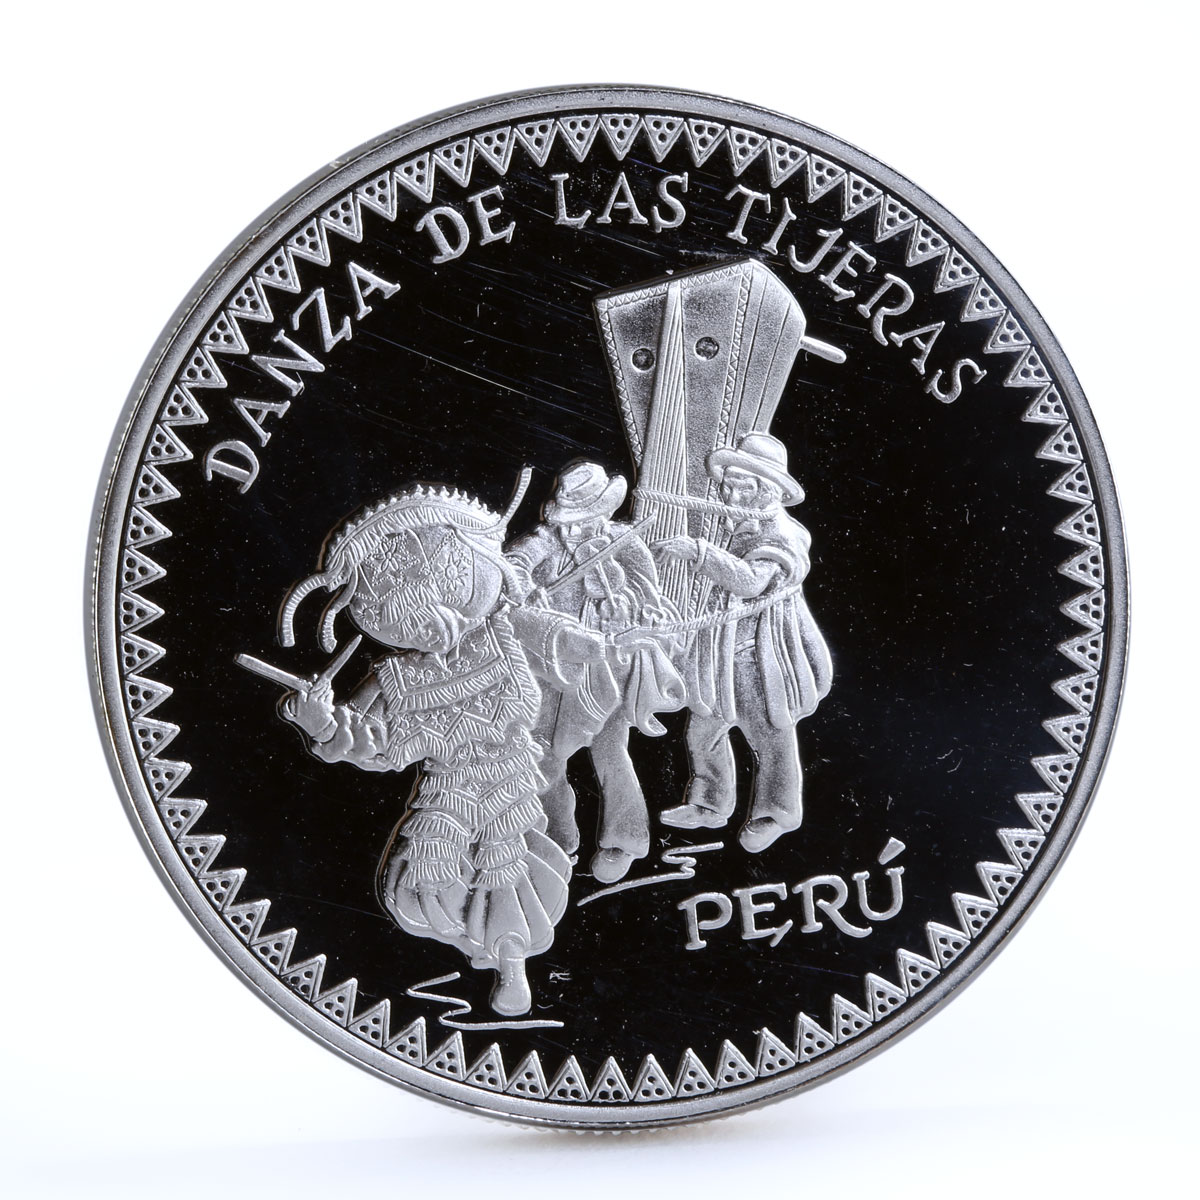 Peru 1 sol Danza de las Tijeras Dancing Festival Culture proof silver coin 1997